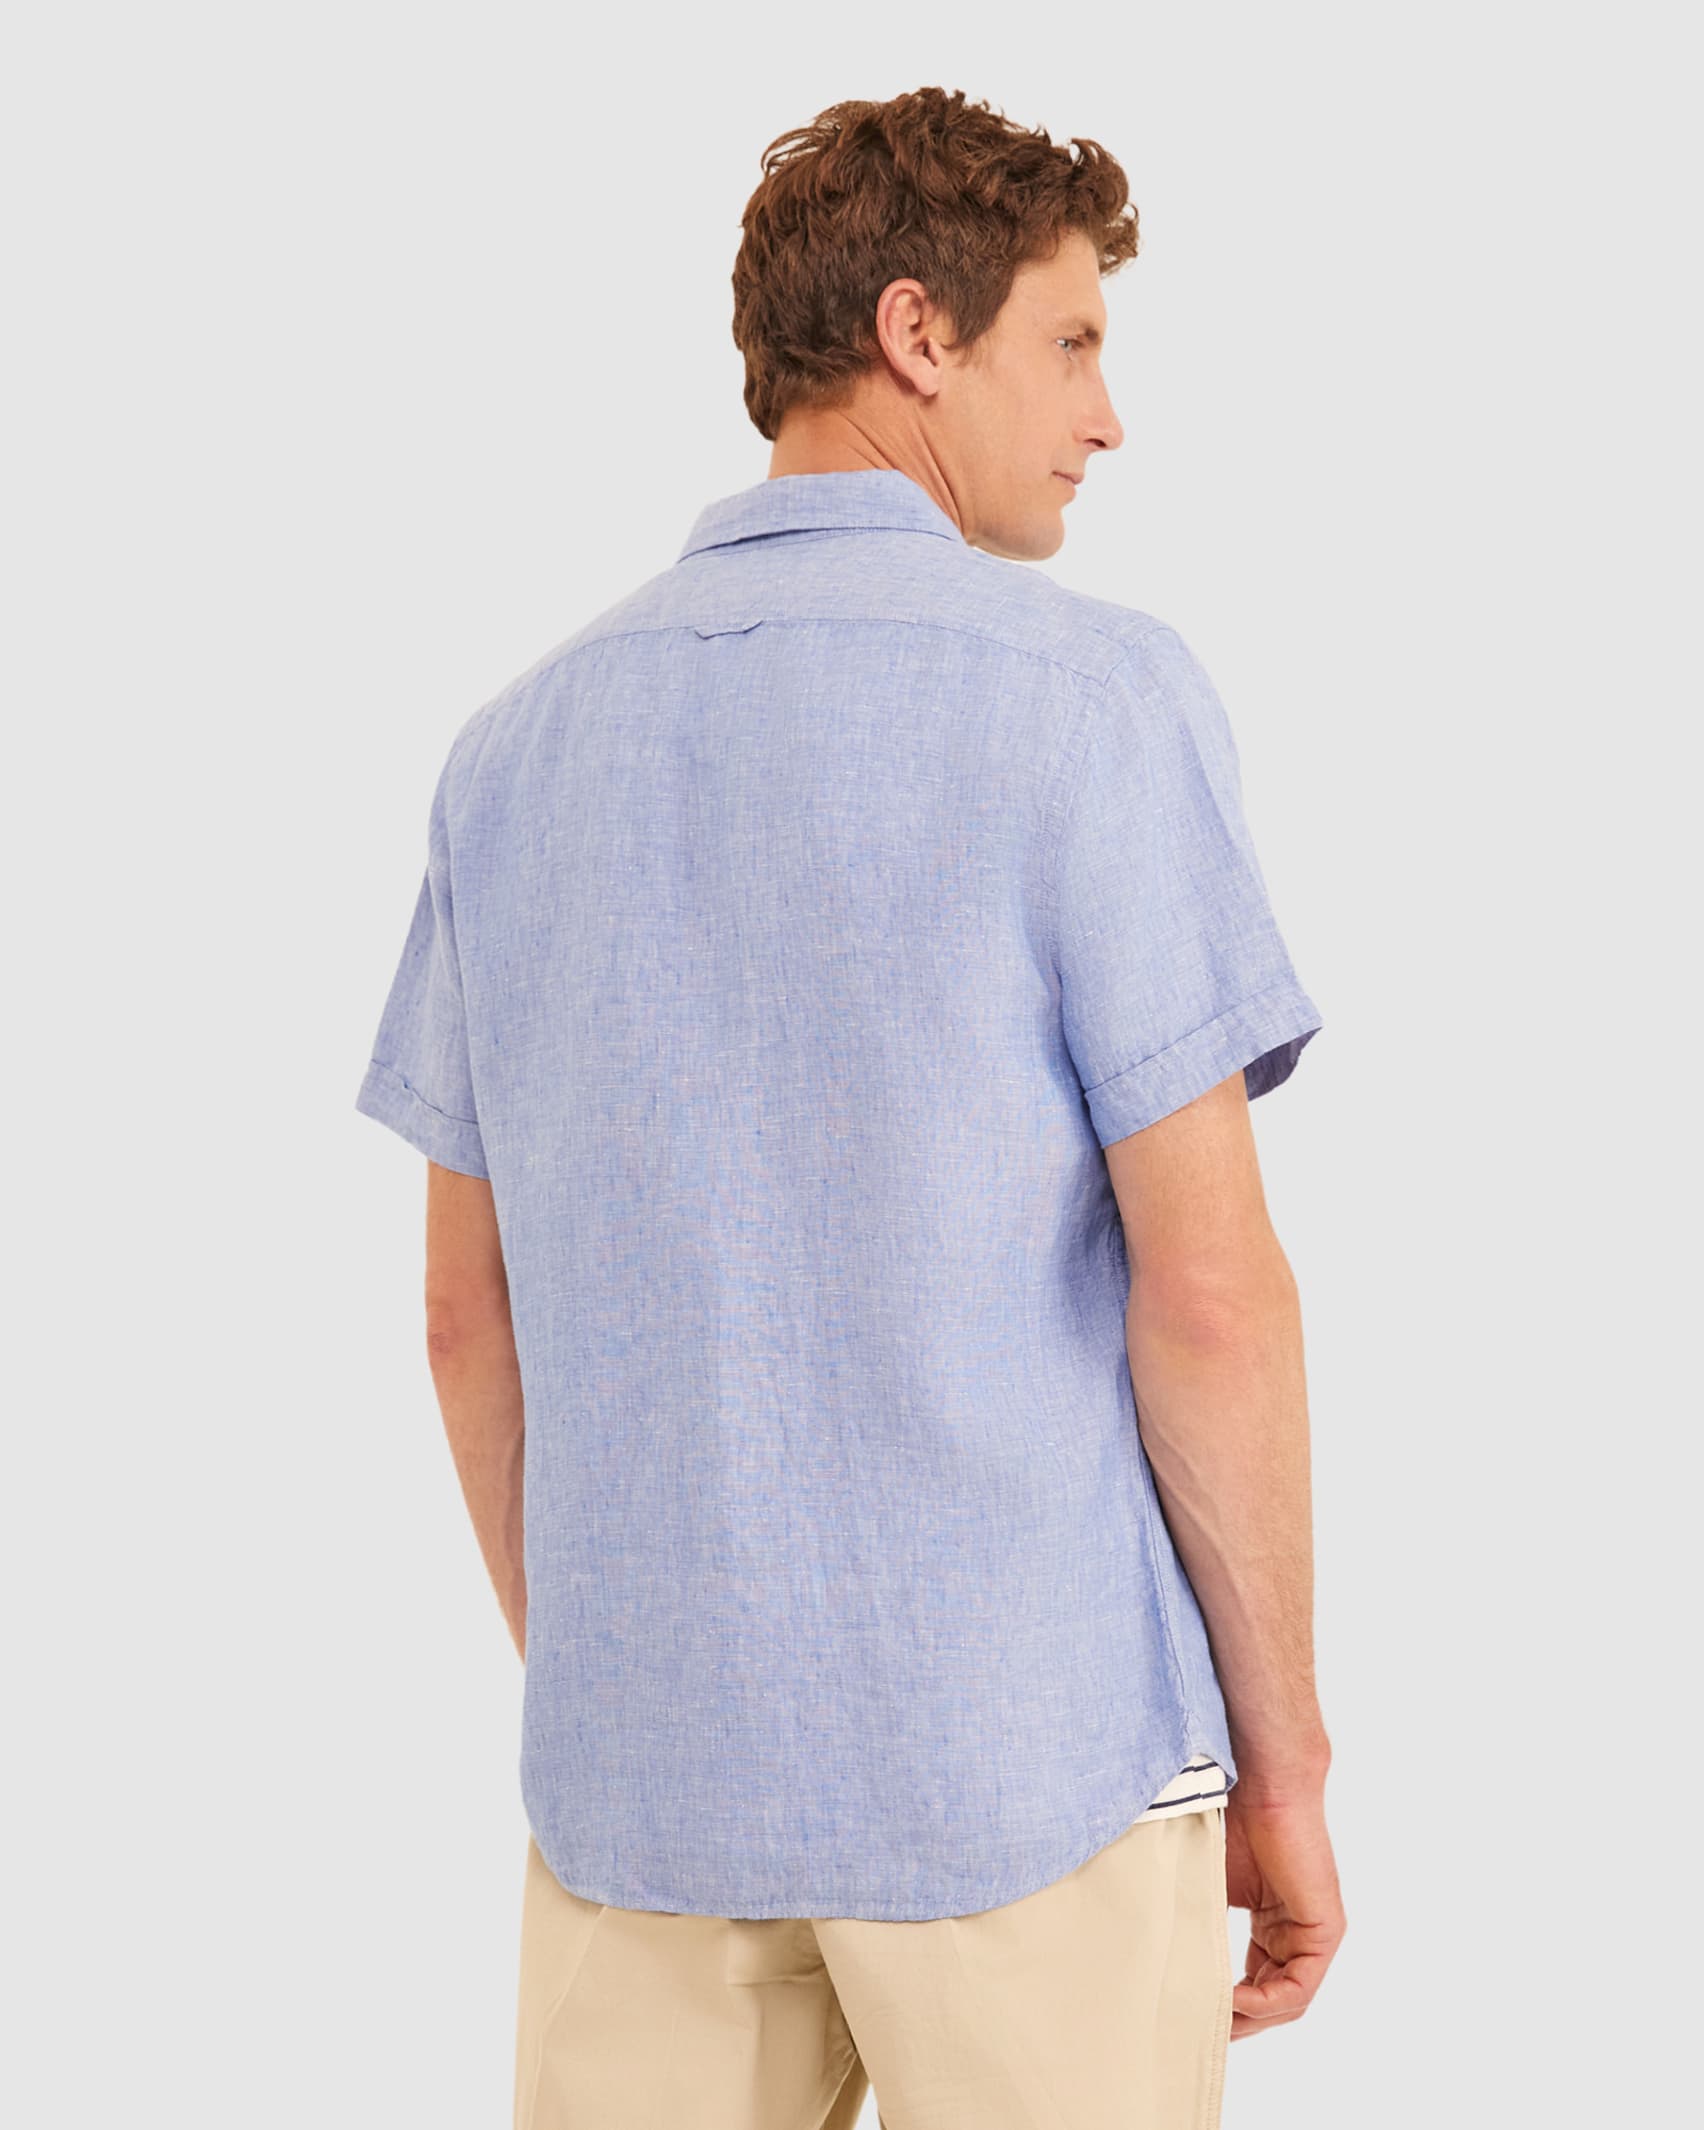 Yarn Dyed Linen Short Sleeve Shirt in CHAMBRAY